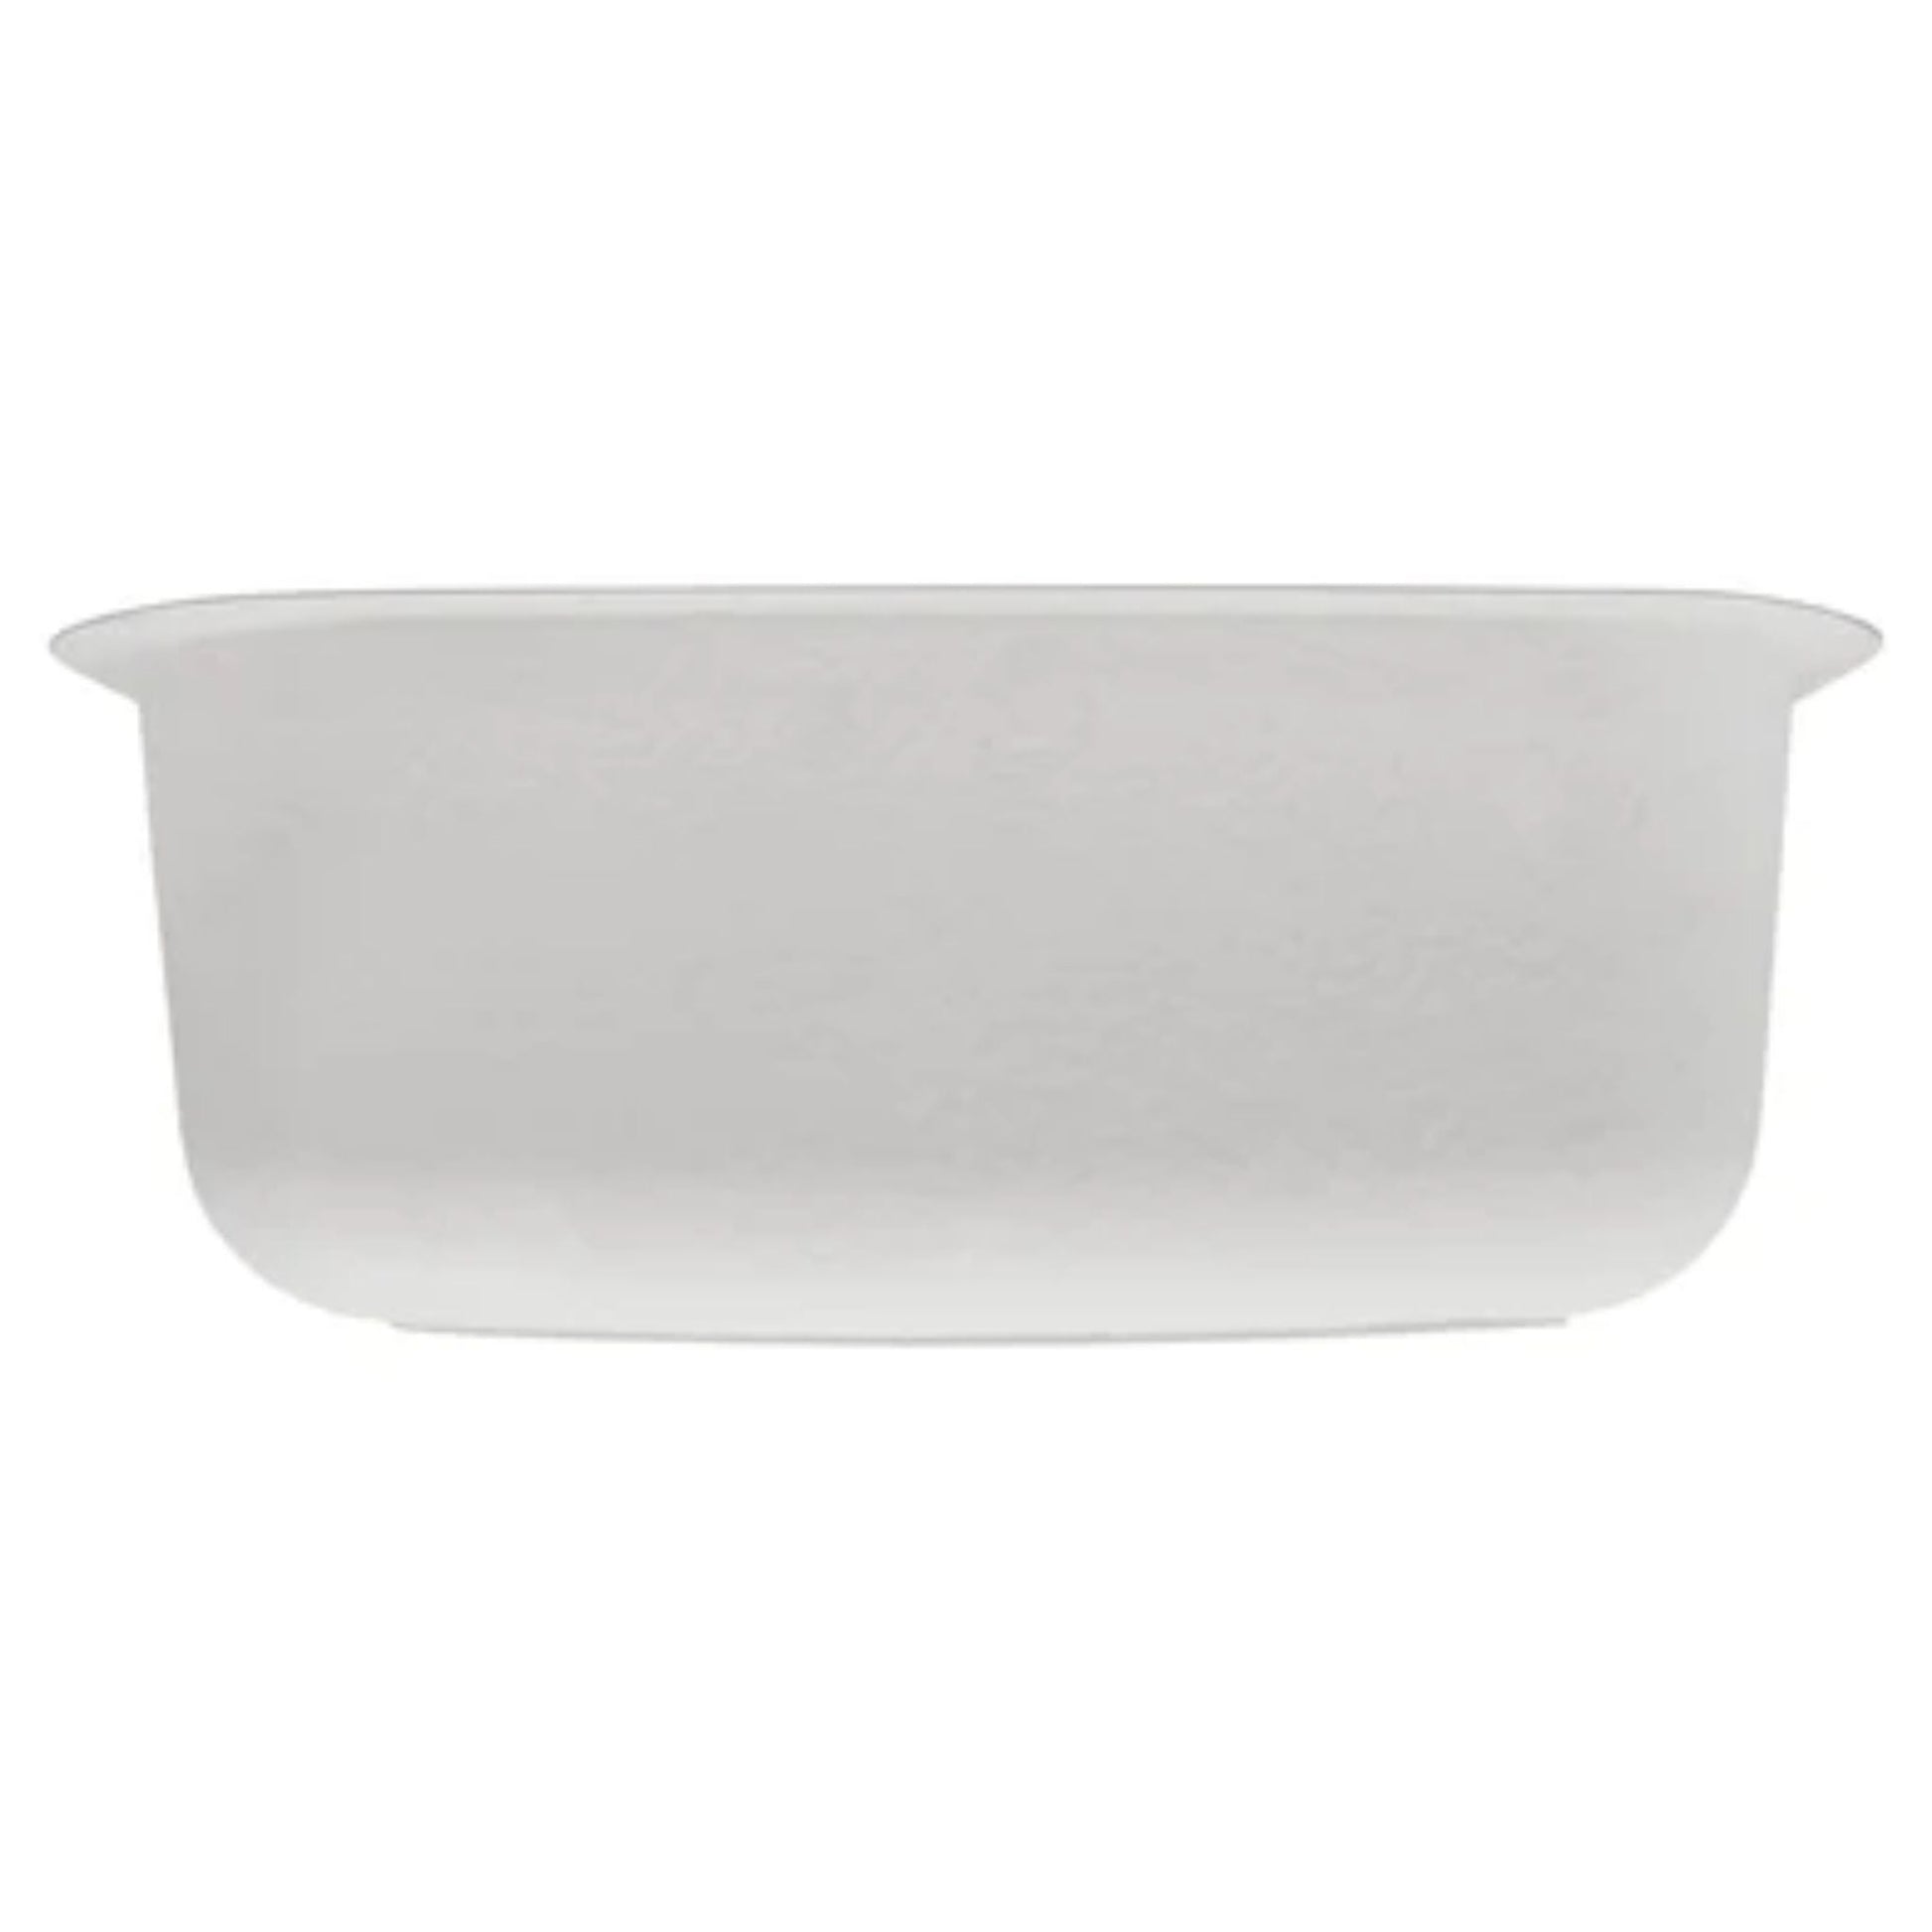 LessCare Undermount Stainless Steel Single Bowl Kitchen Sink - L106